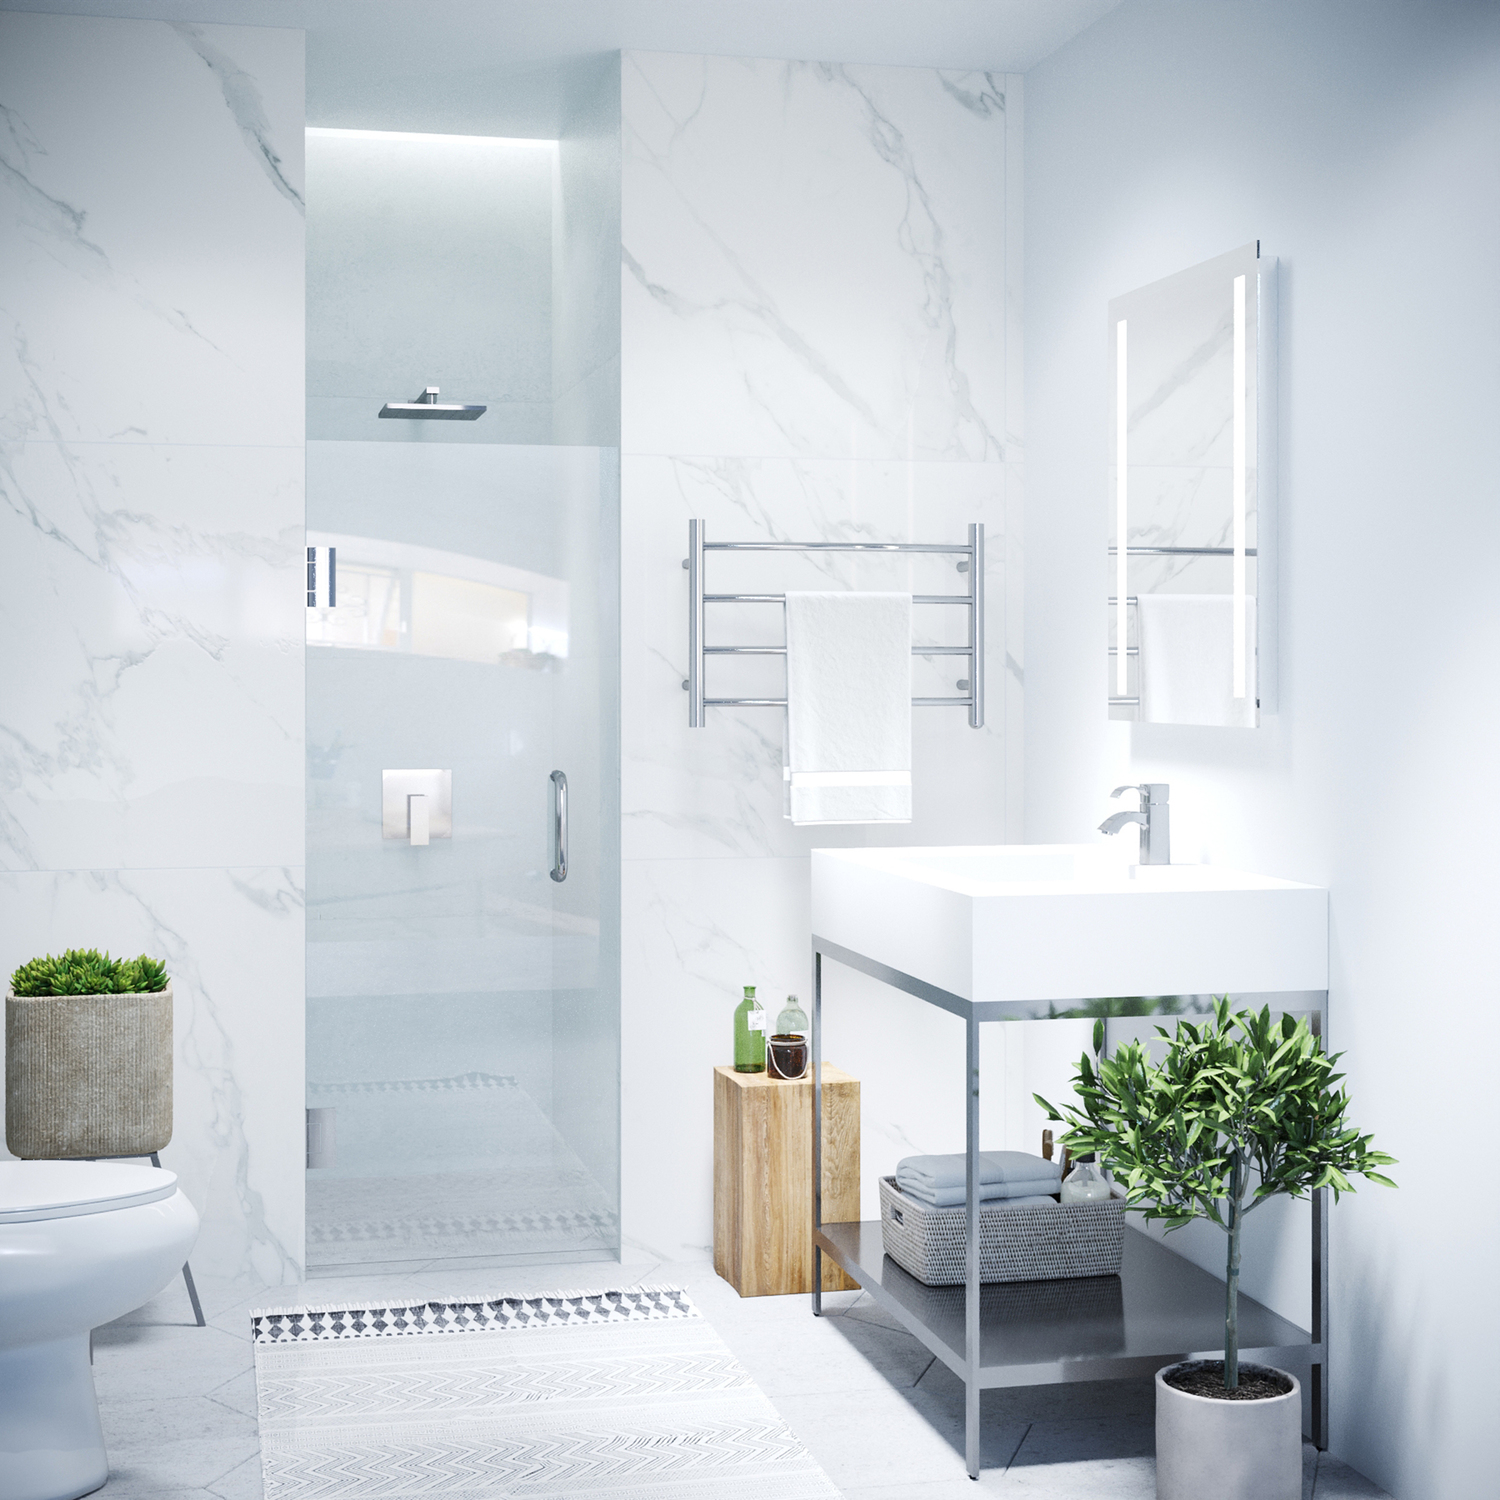 bathtub with side door Anzzi SHOWER - Shower Doors - Hinged Chrome